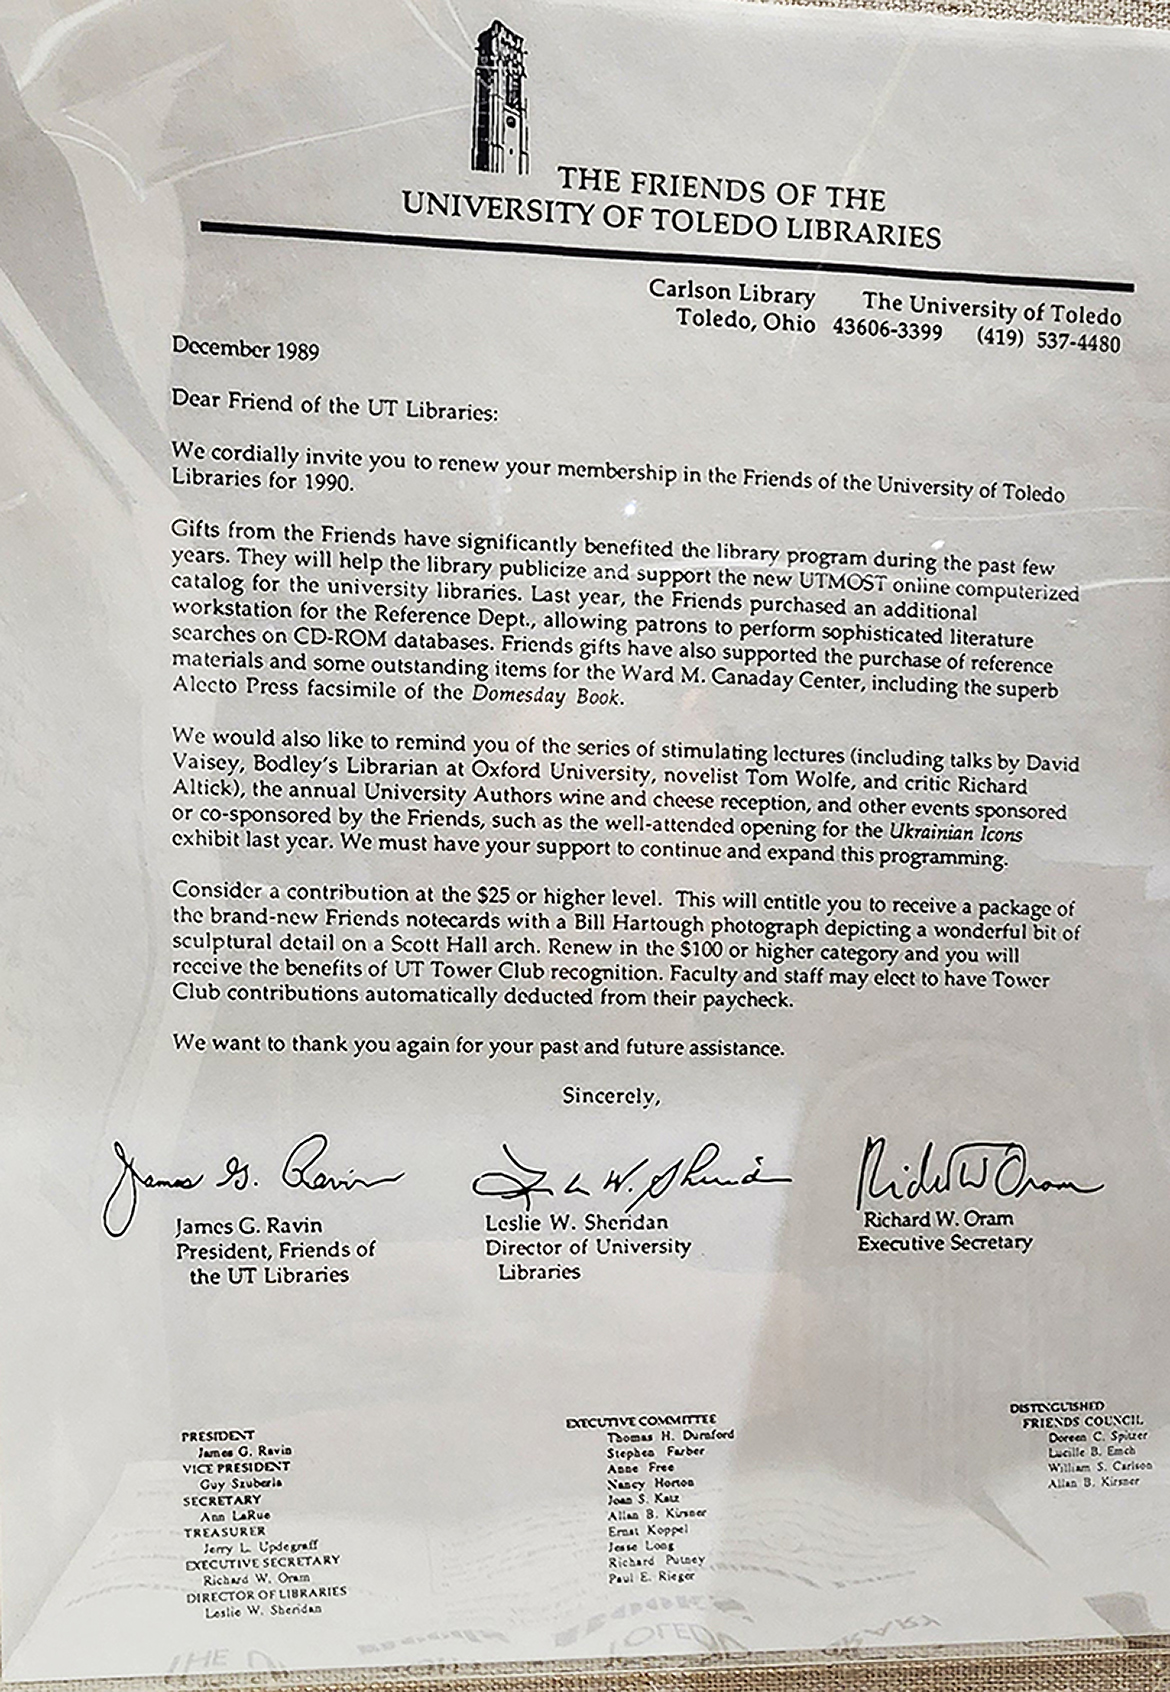 Friends of the UT Libraries Membership Letter, December 1989